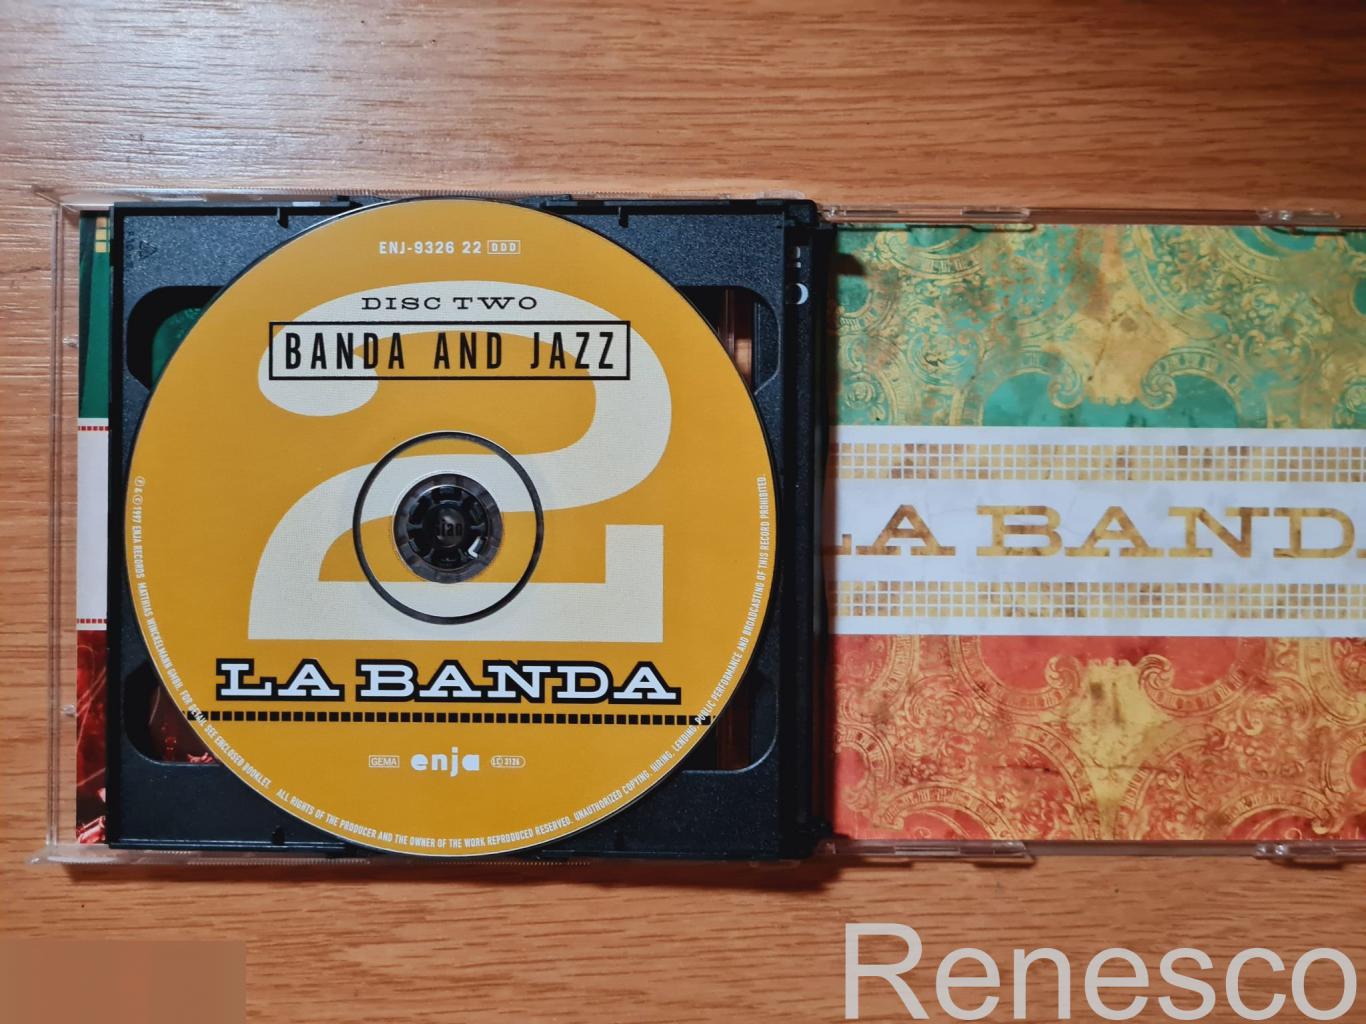 La Banda – Traditional Italian Banda / Banda And Jazz (Europe) (1997) 6